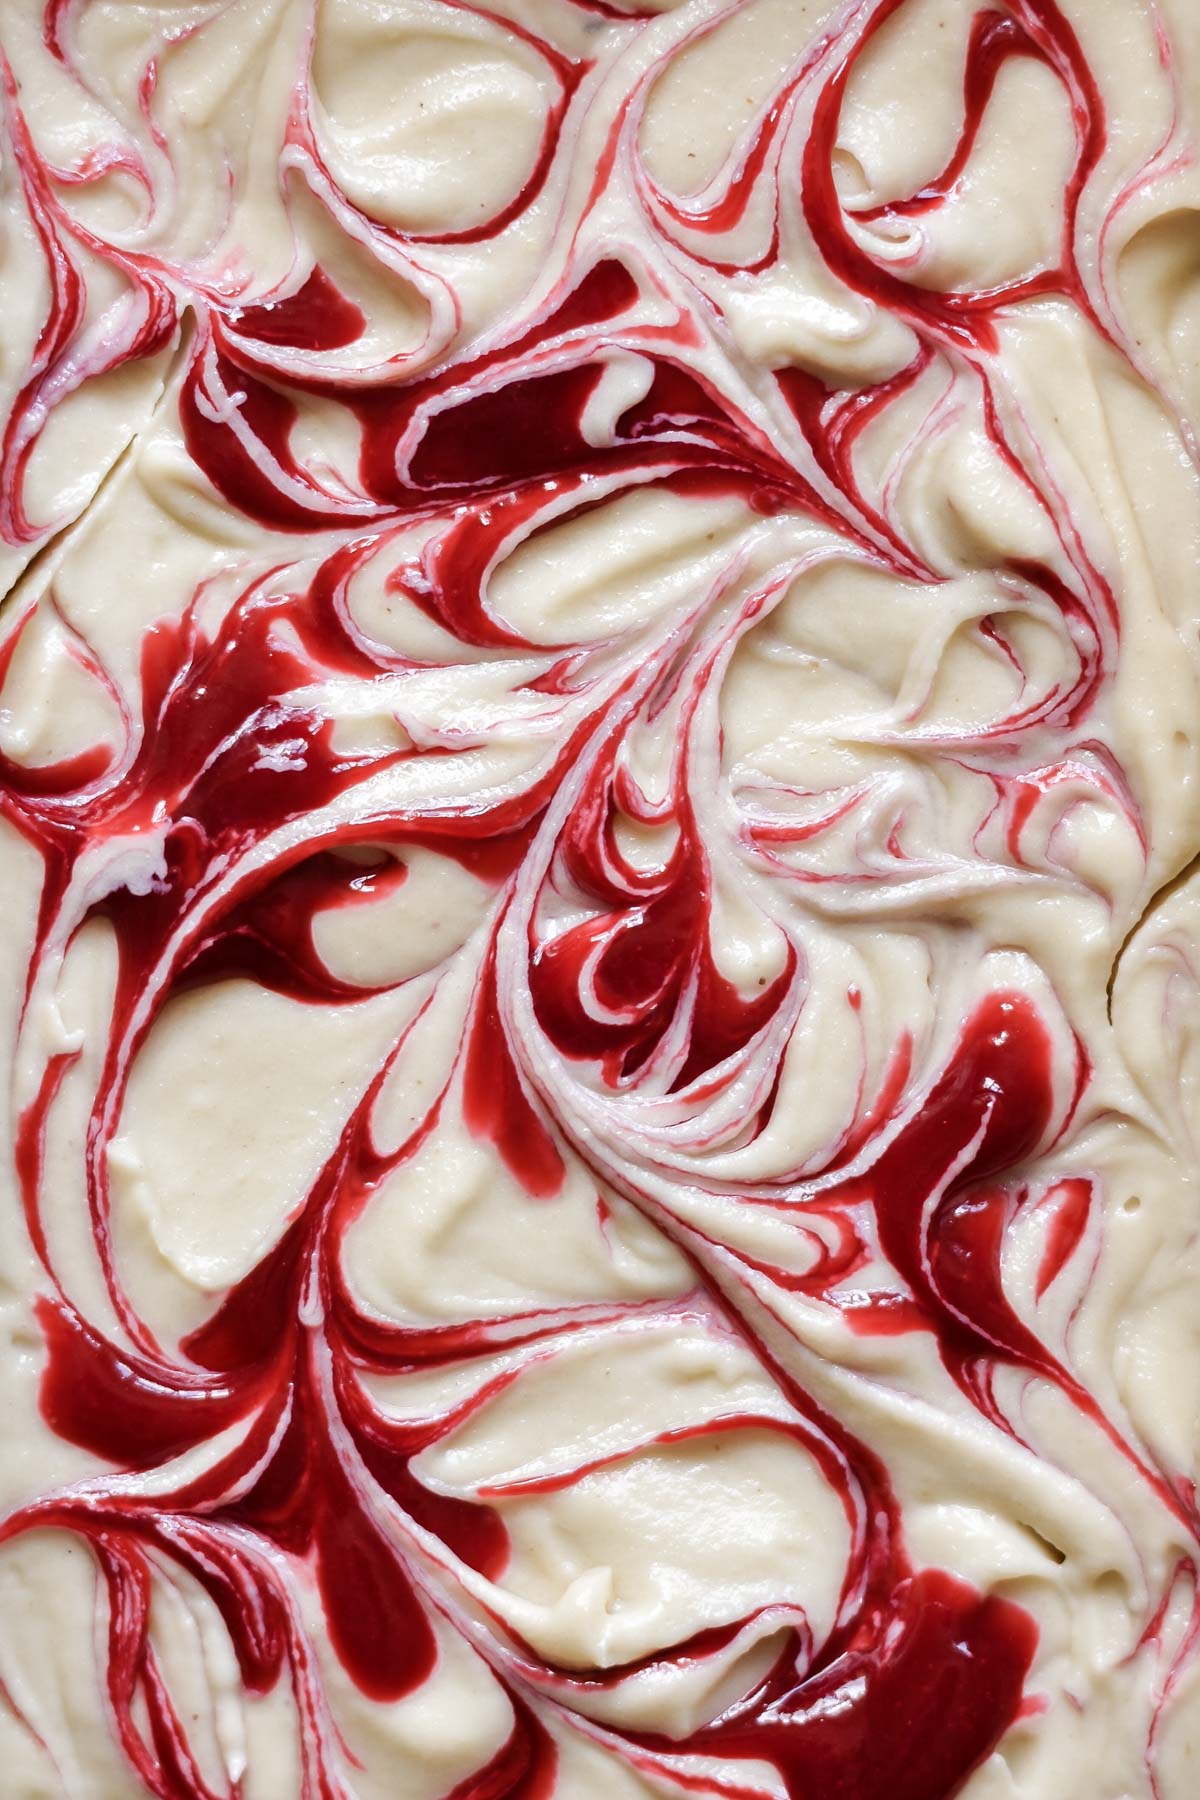 strawberry sauce swirled through cheesecake filling